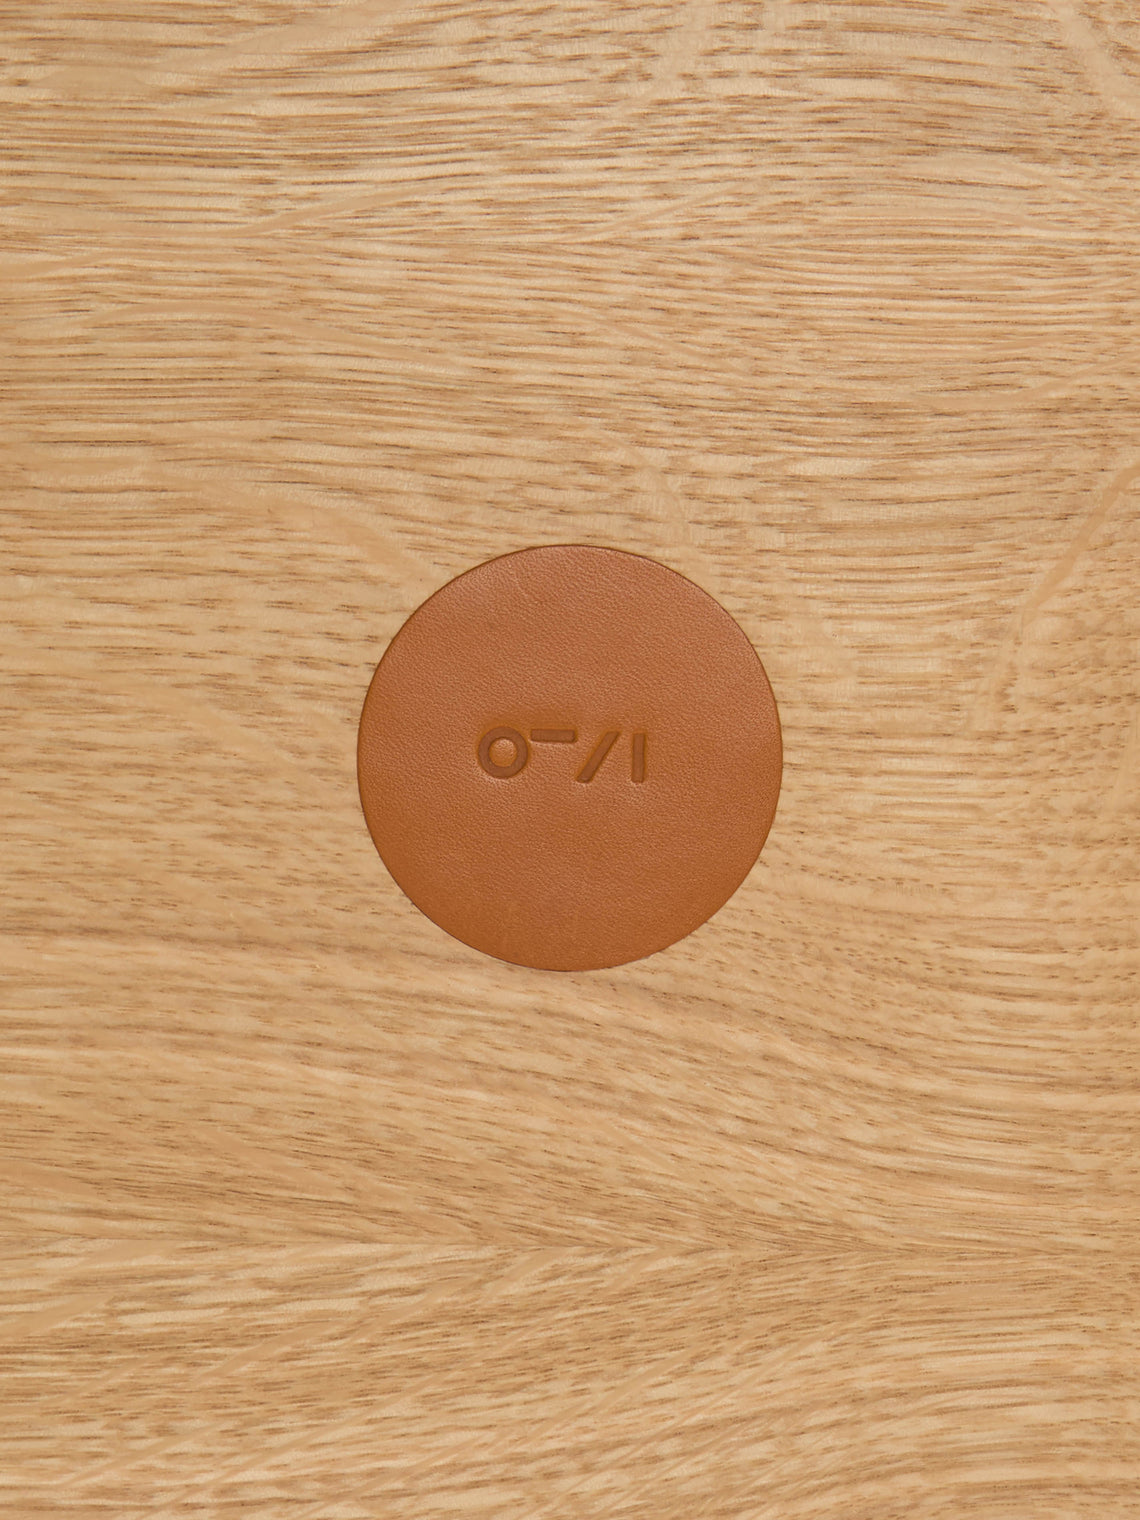 Otis Ingrams - Bolster Leather and Wood Tray -  - ABASK